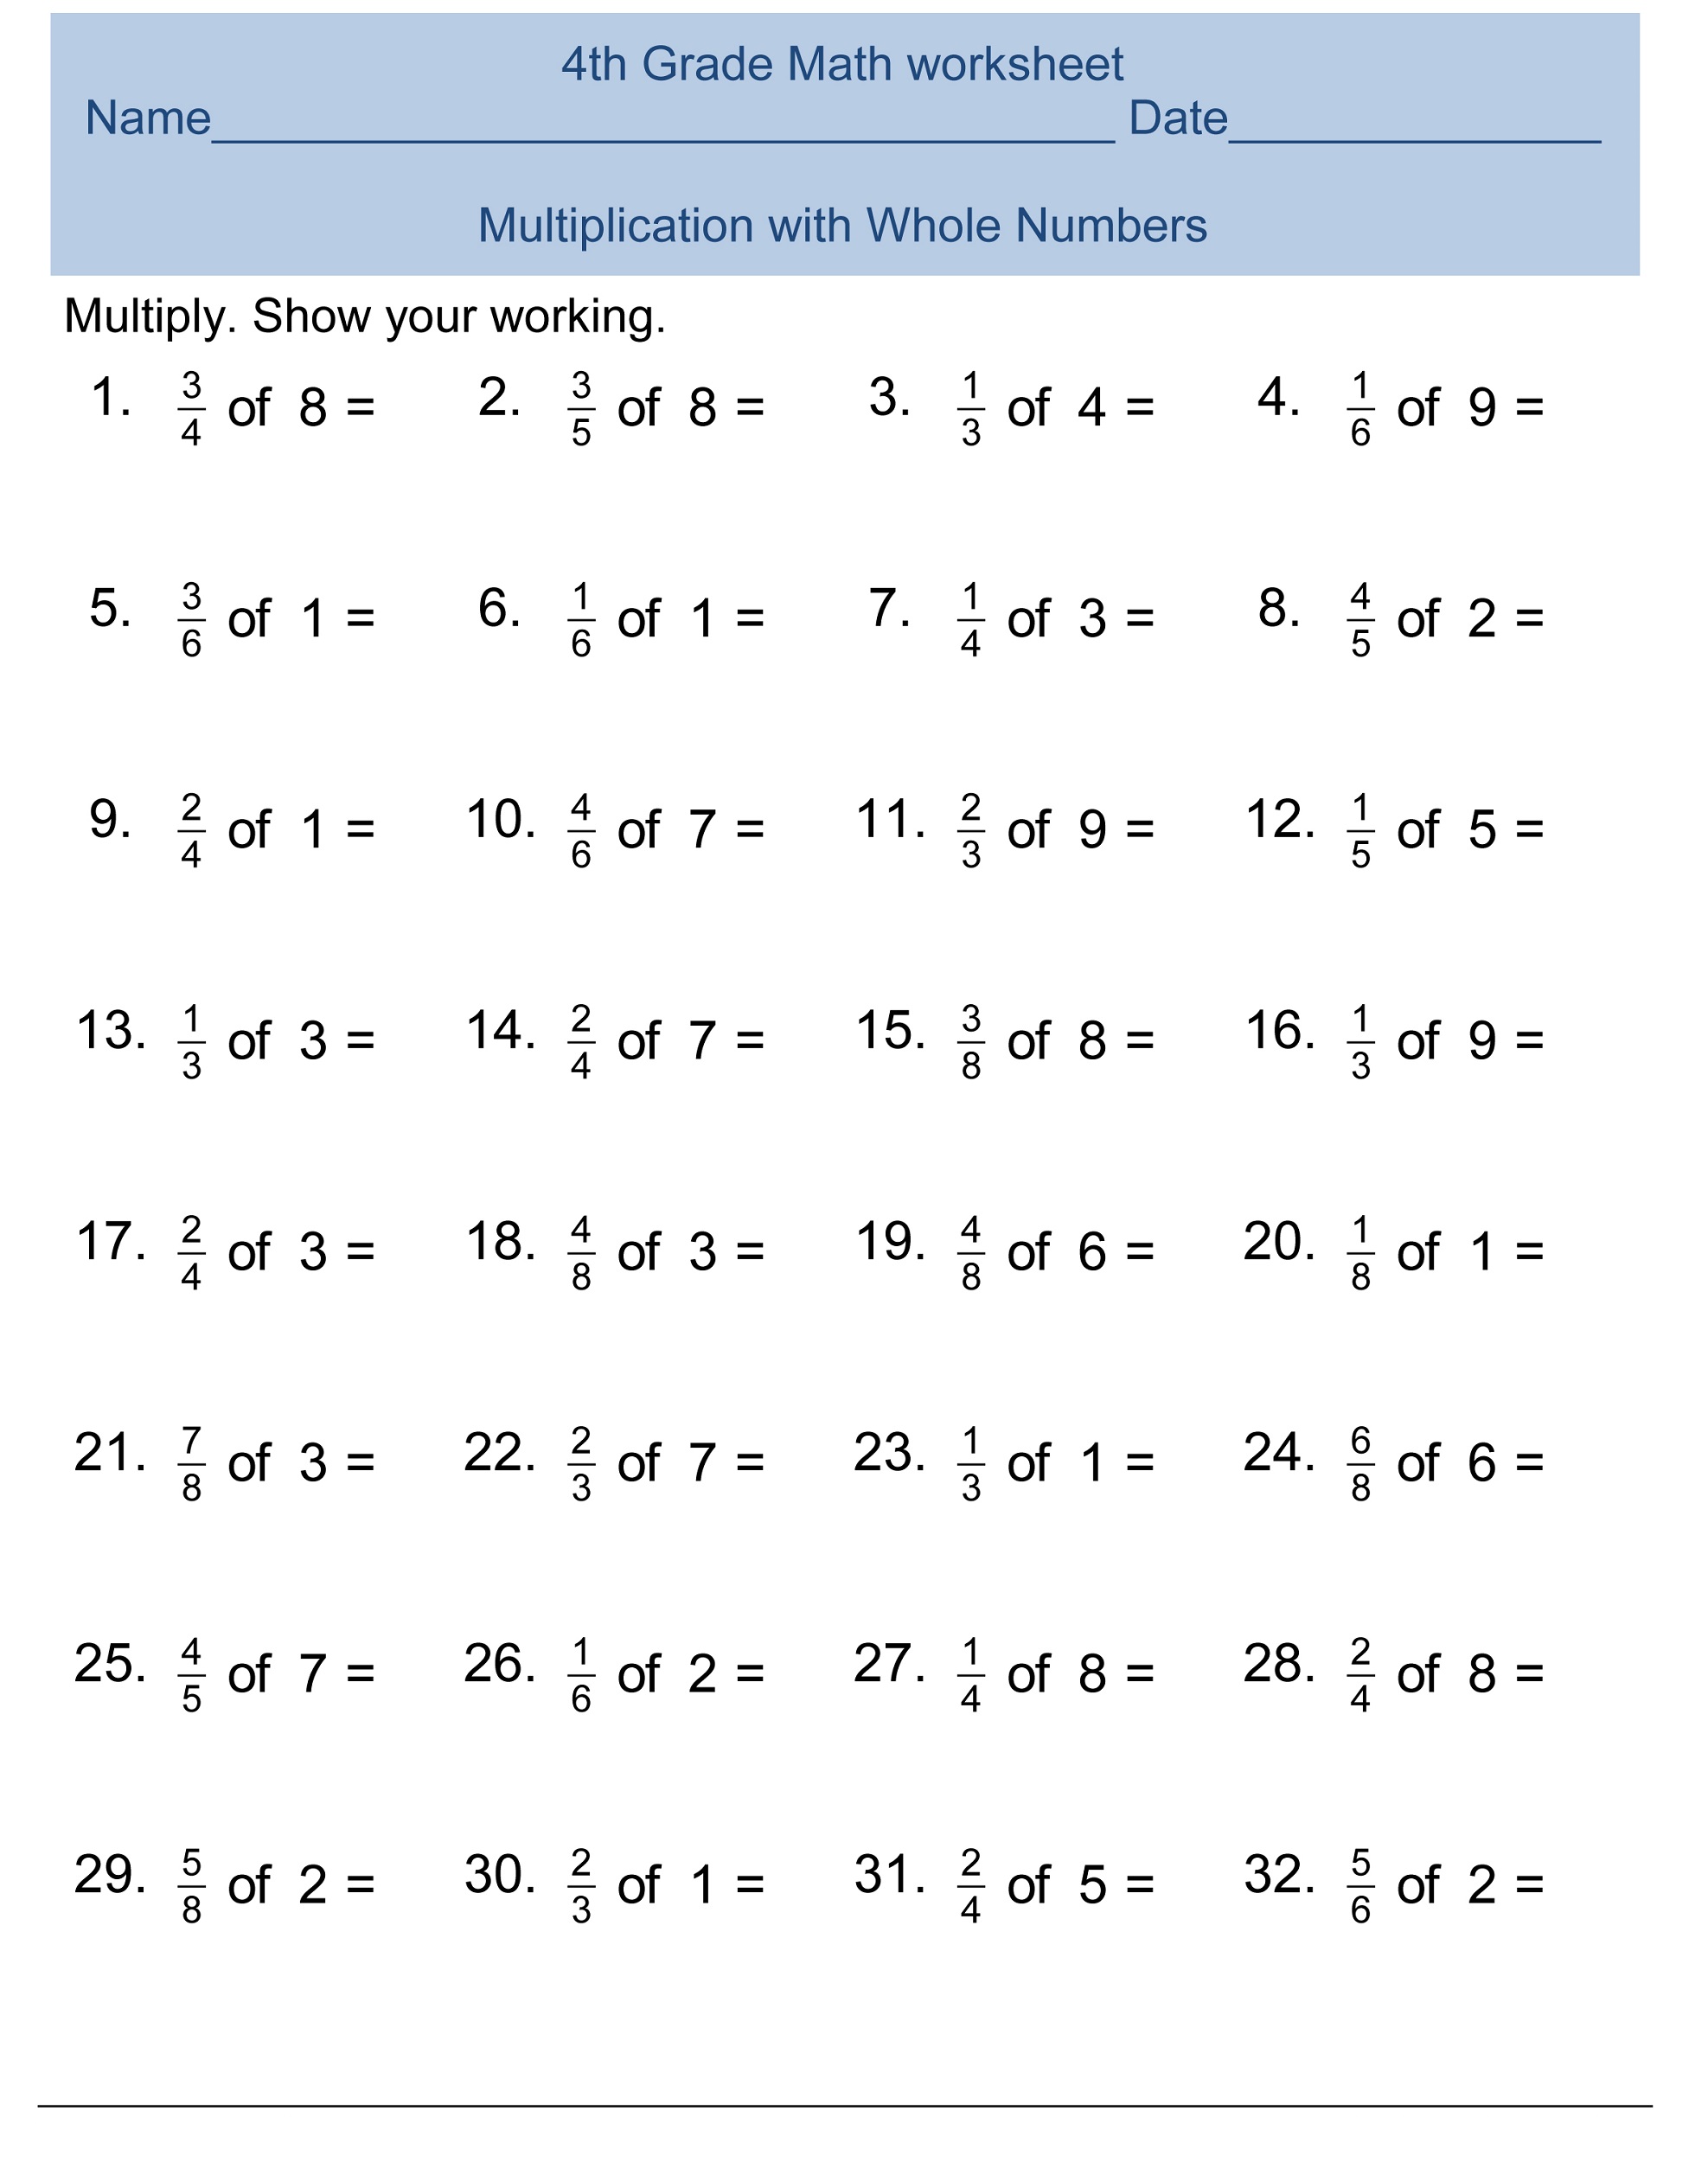 Free 4th Grade Math Worksheets | Activity Shelter